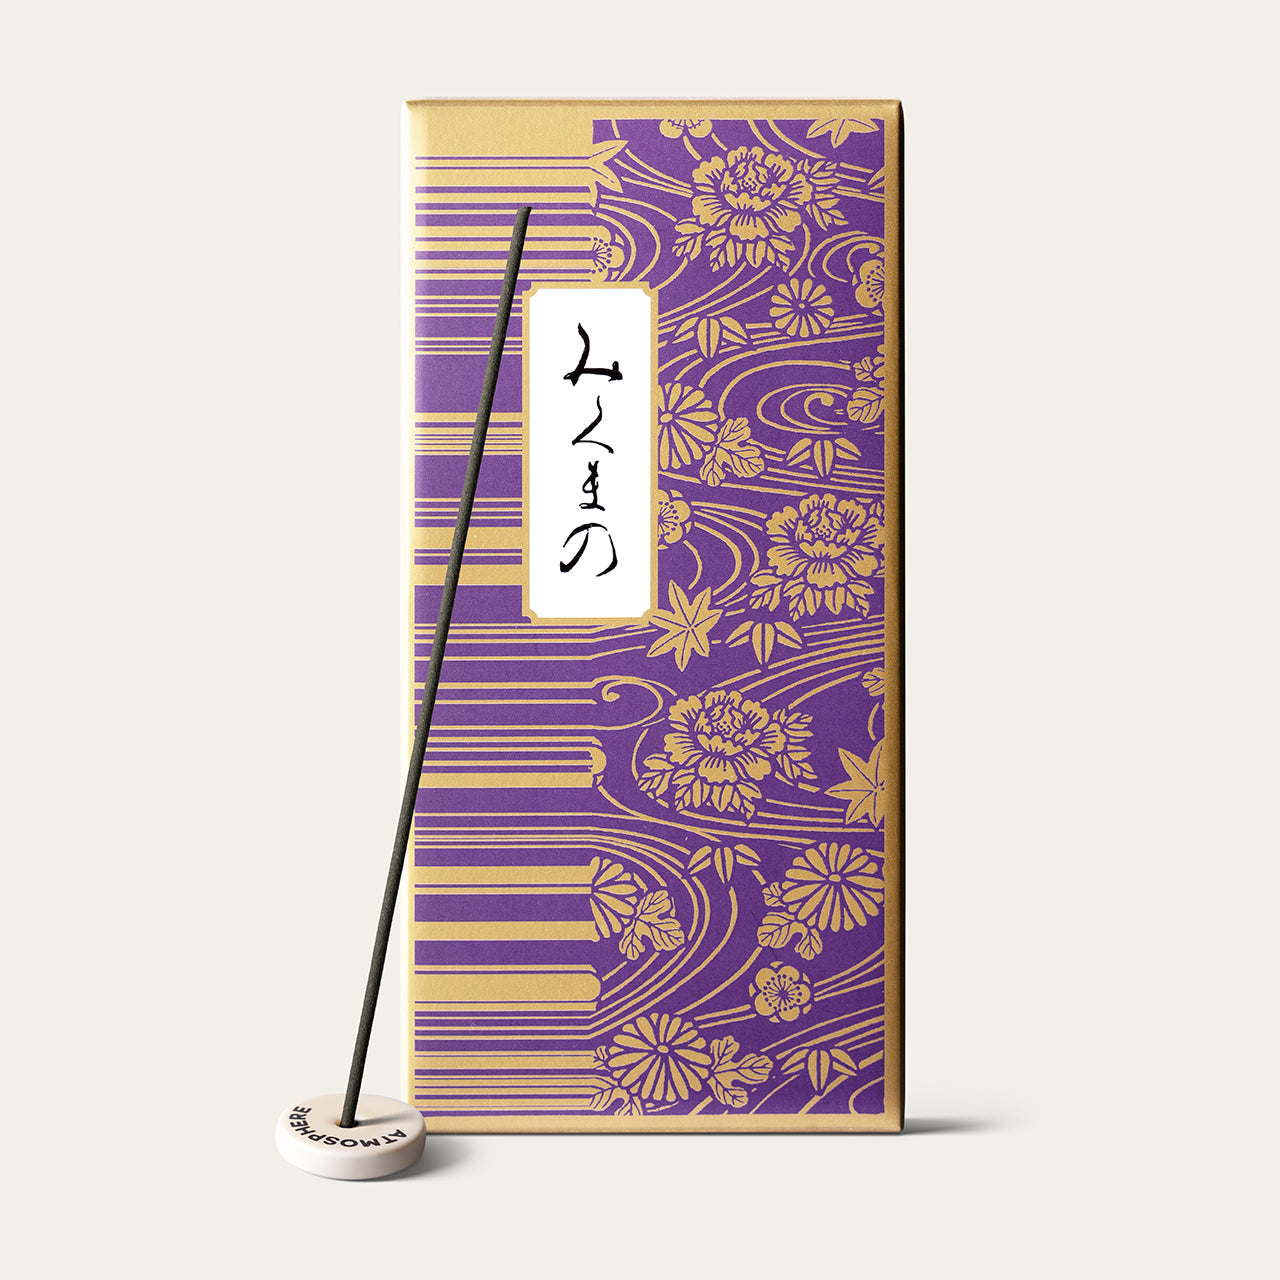 Kyukyodo Premium Mikuma Mikumano Japanese incense sticks (200 sticks) with Atmosphere ceramic incense holder